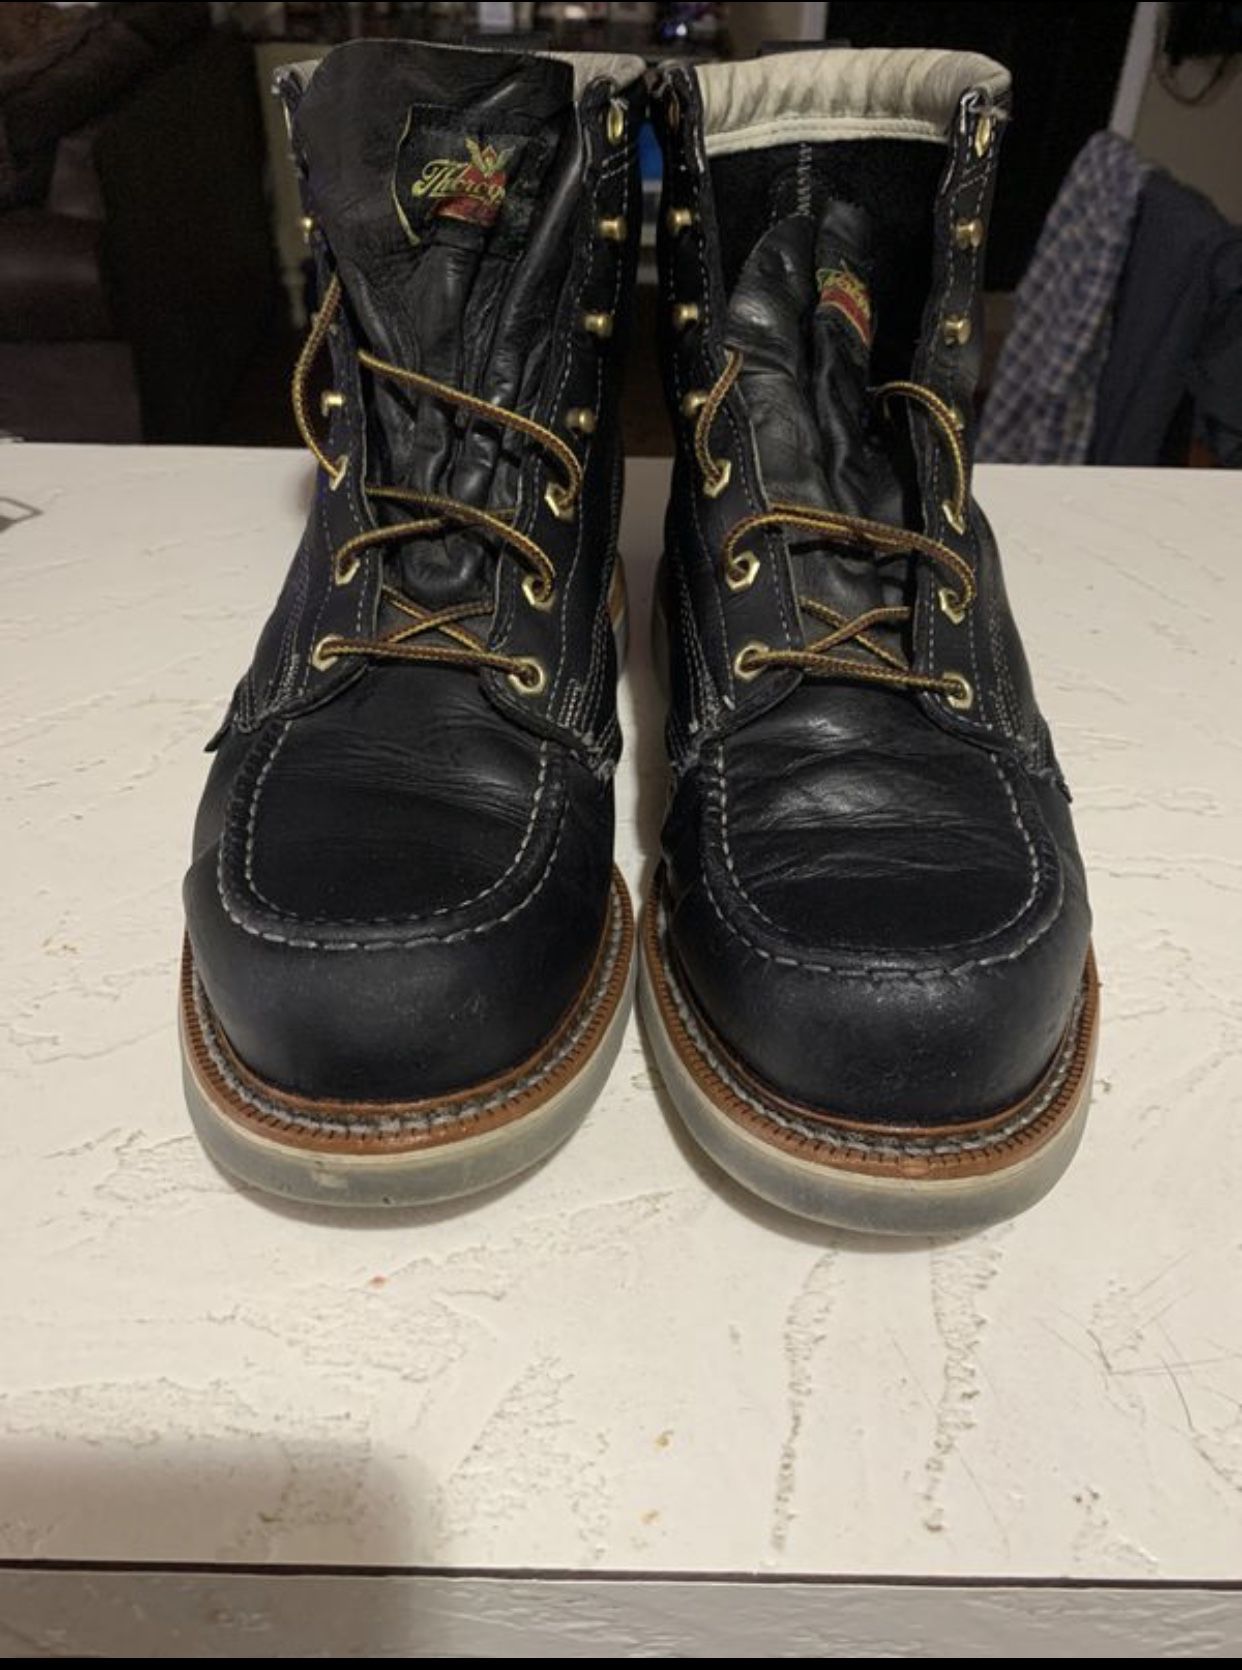 Thorogood Moc toe boots size 11 EE